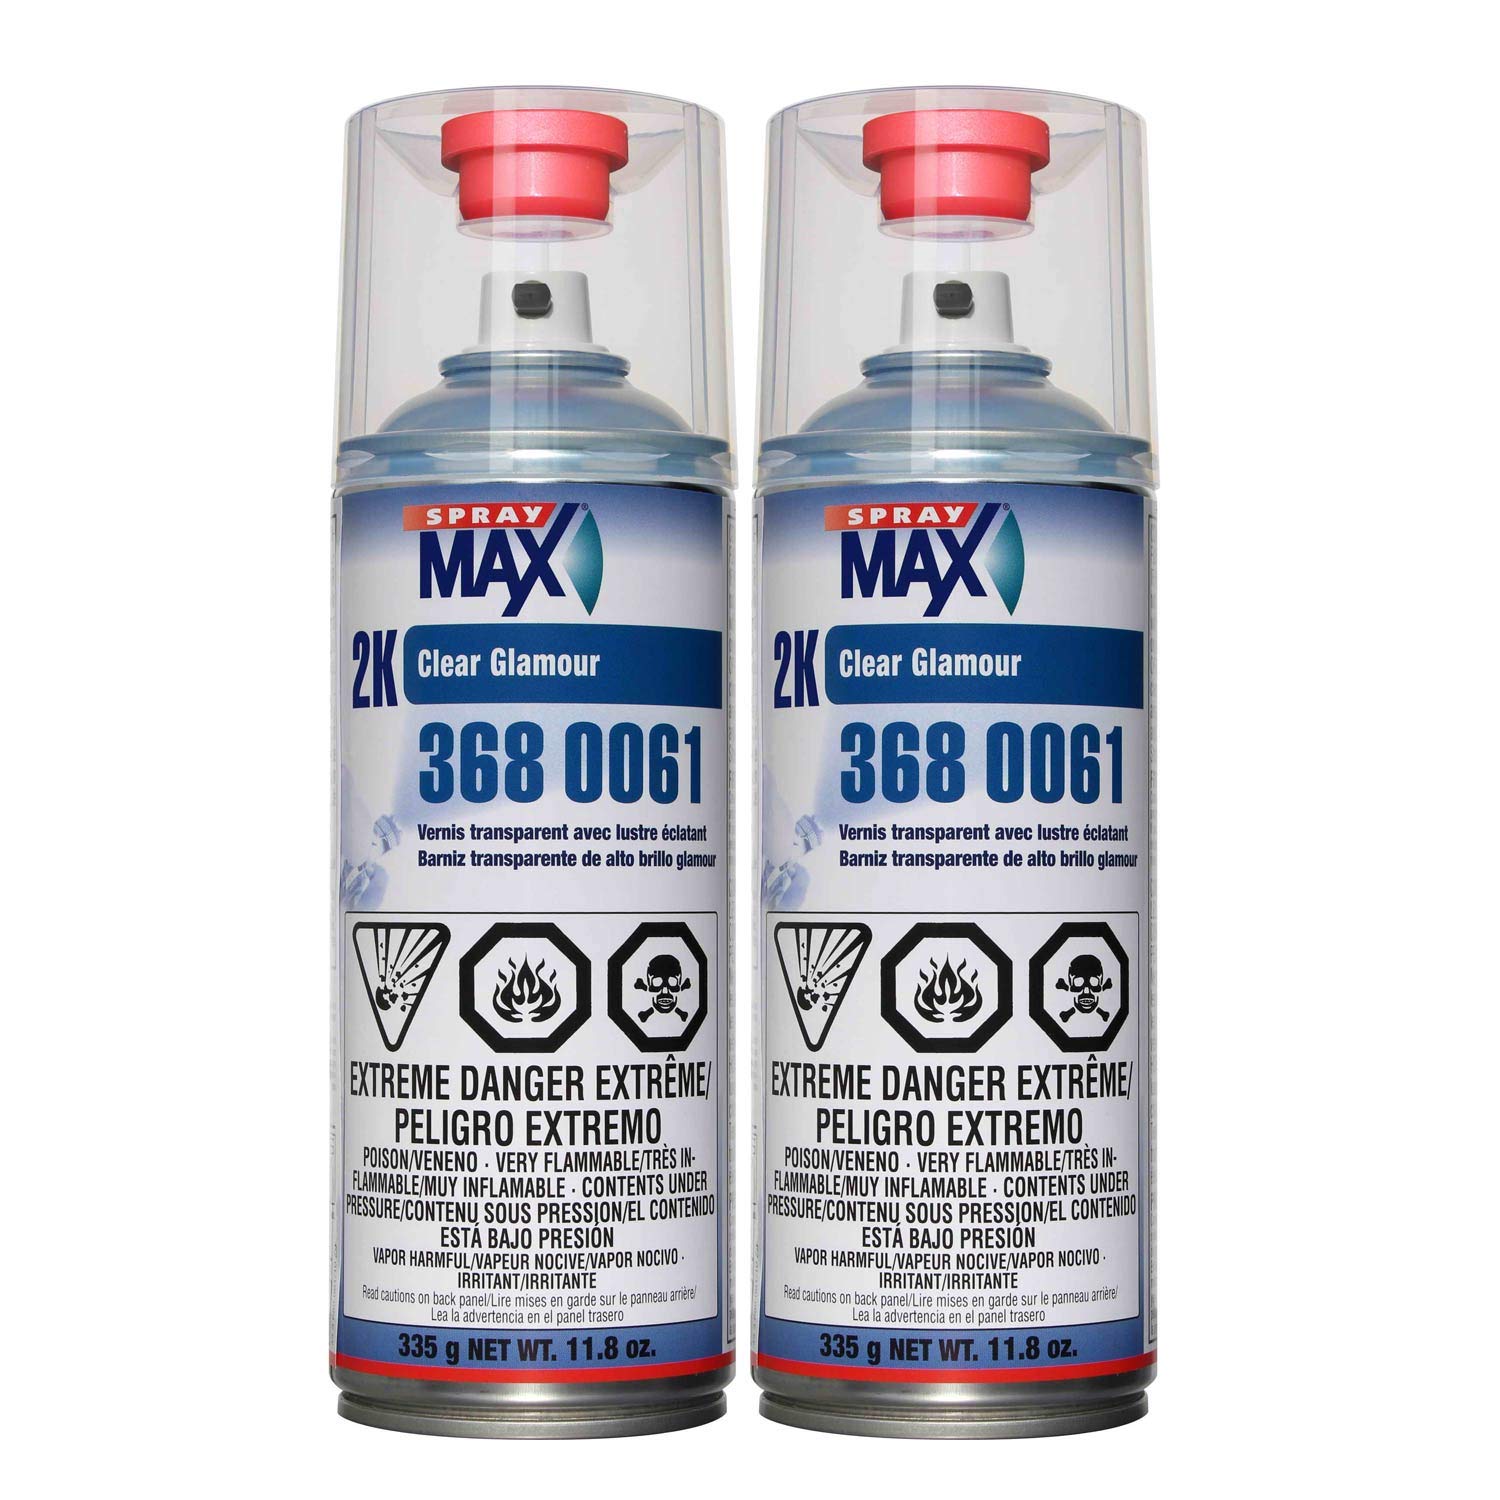 USC Spray Max 2k High Gloss Clearcoat Aerosol 2 PACK